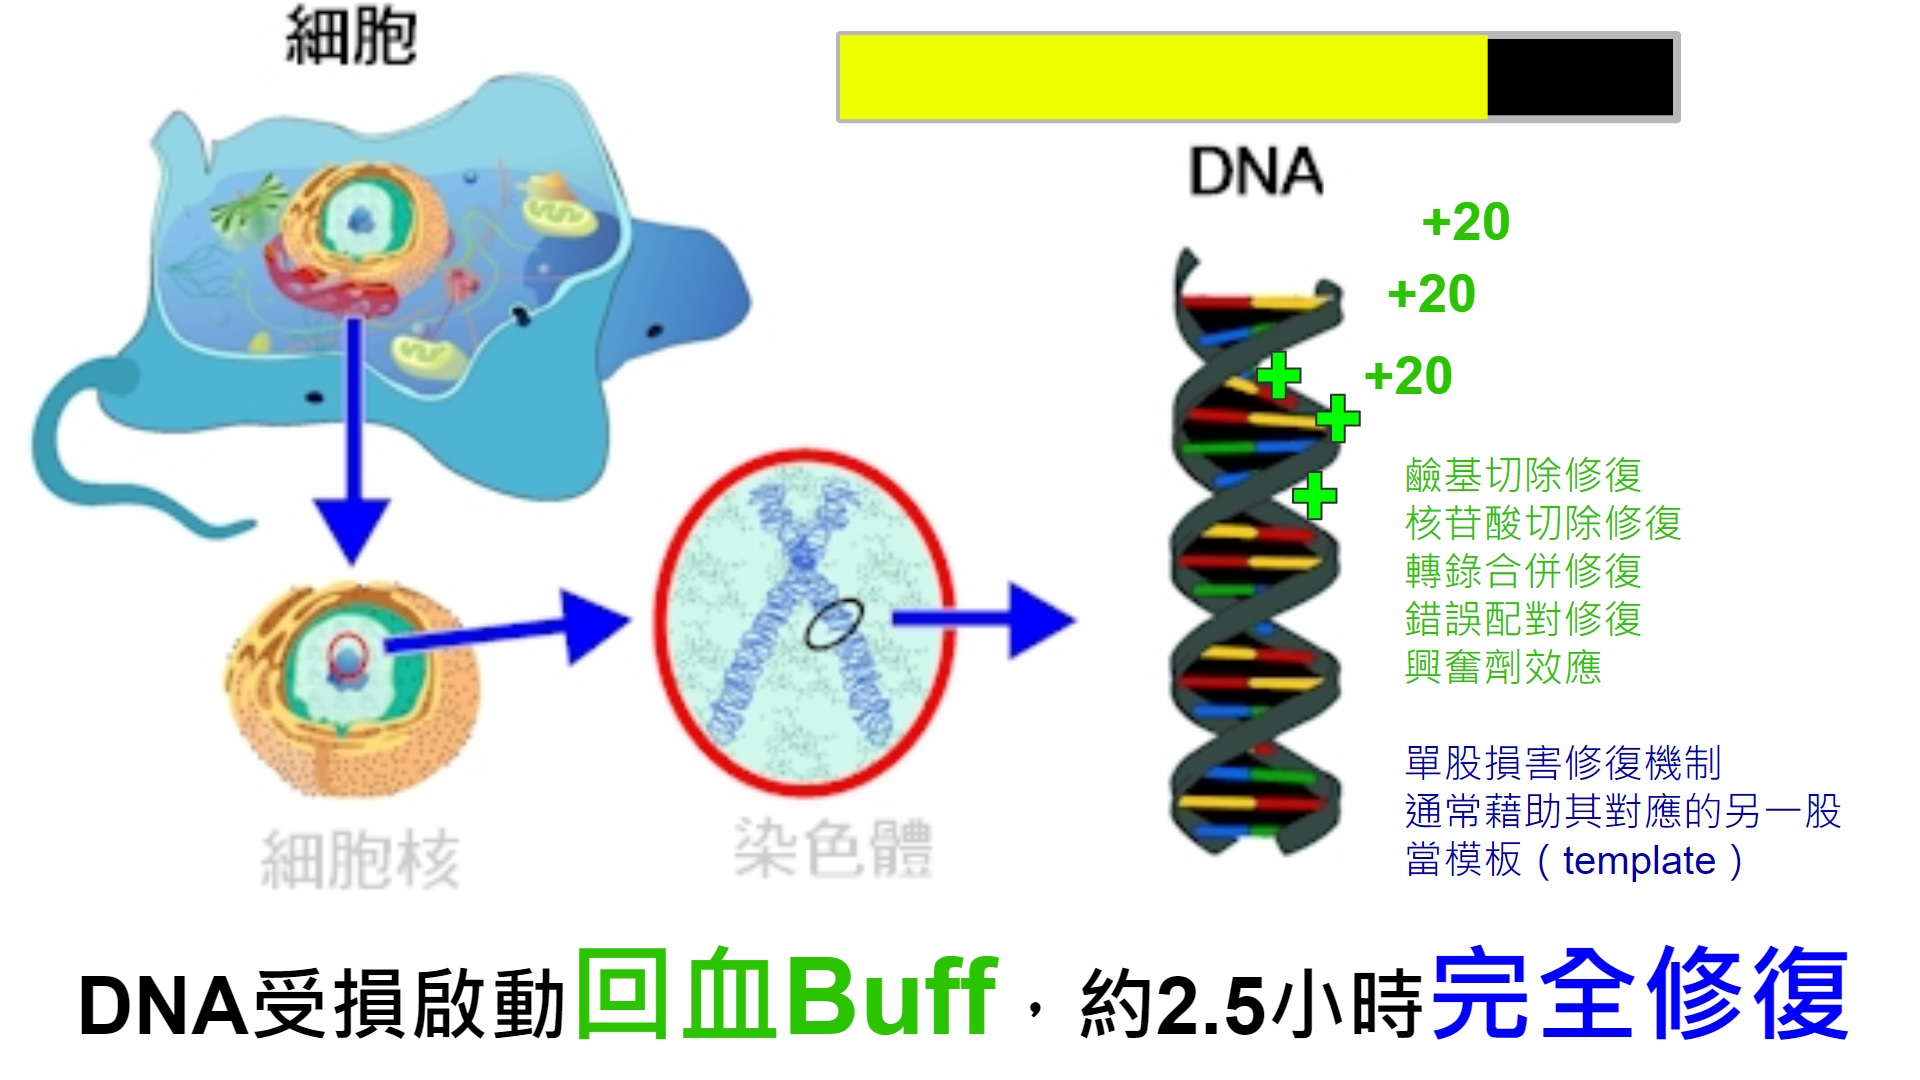 4.DNA受損啟動回血Buff.jpg